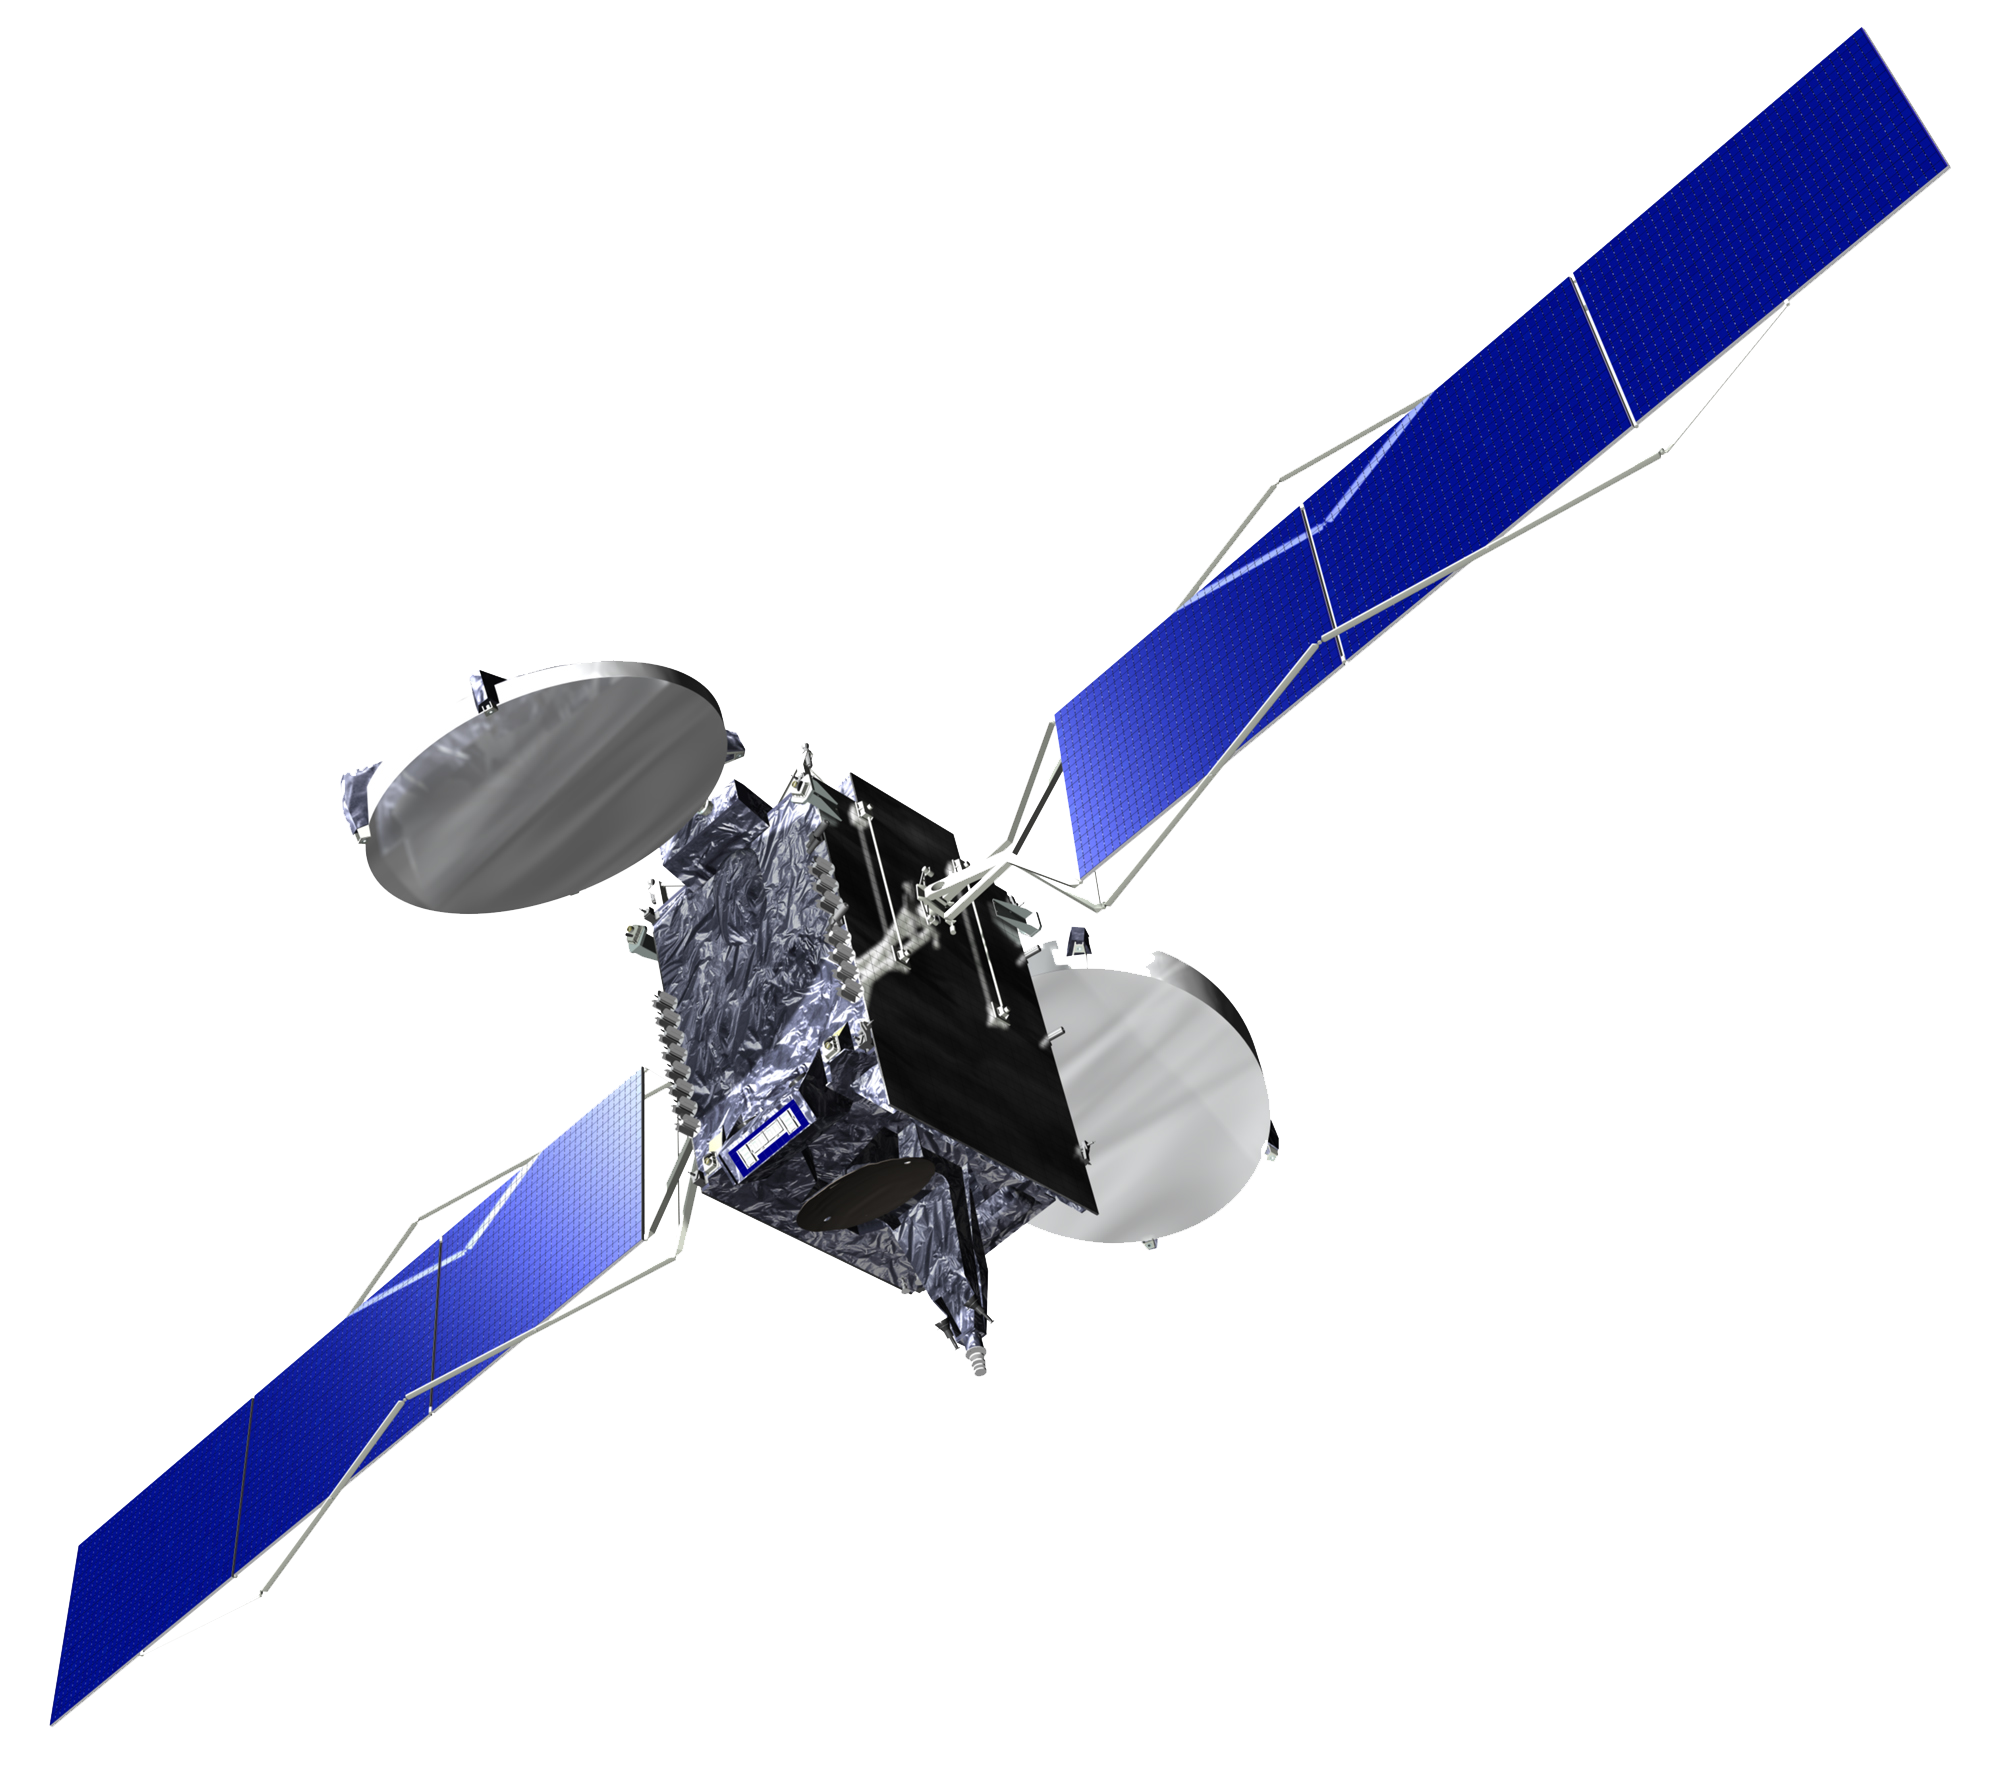 satélite PNG